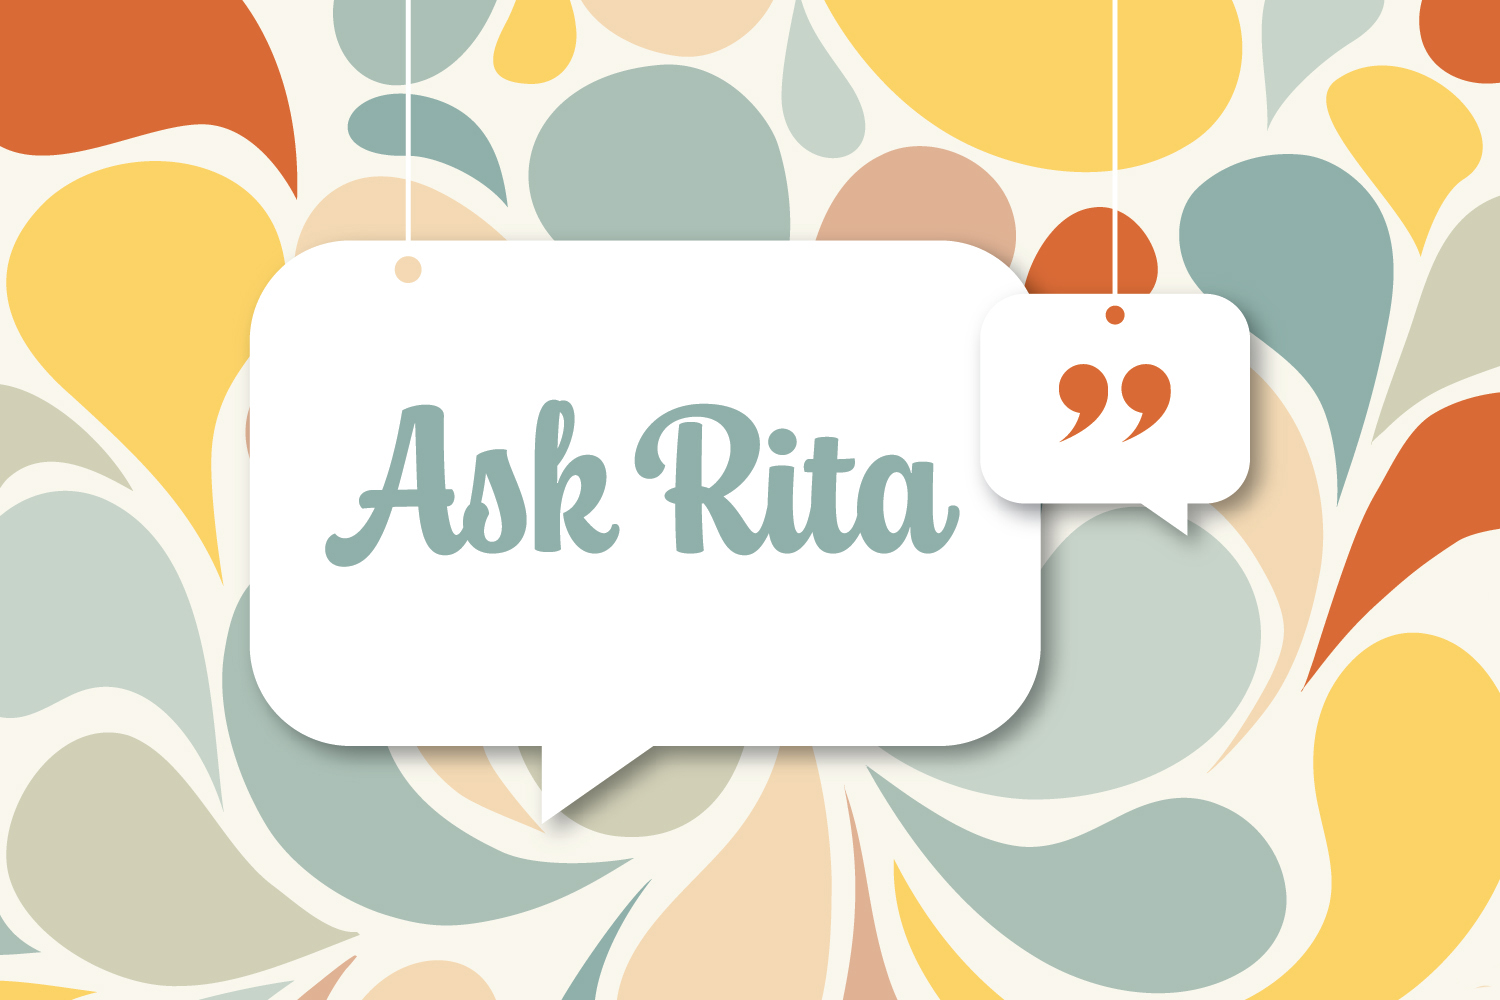 Ask Rita: When Swine Flu Hits the HR Department